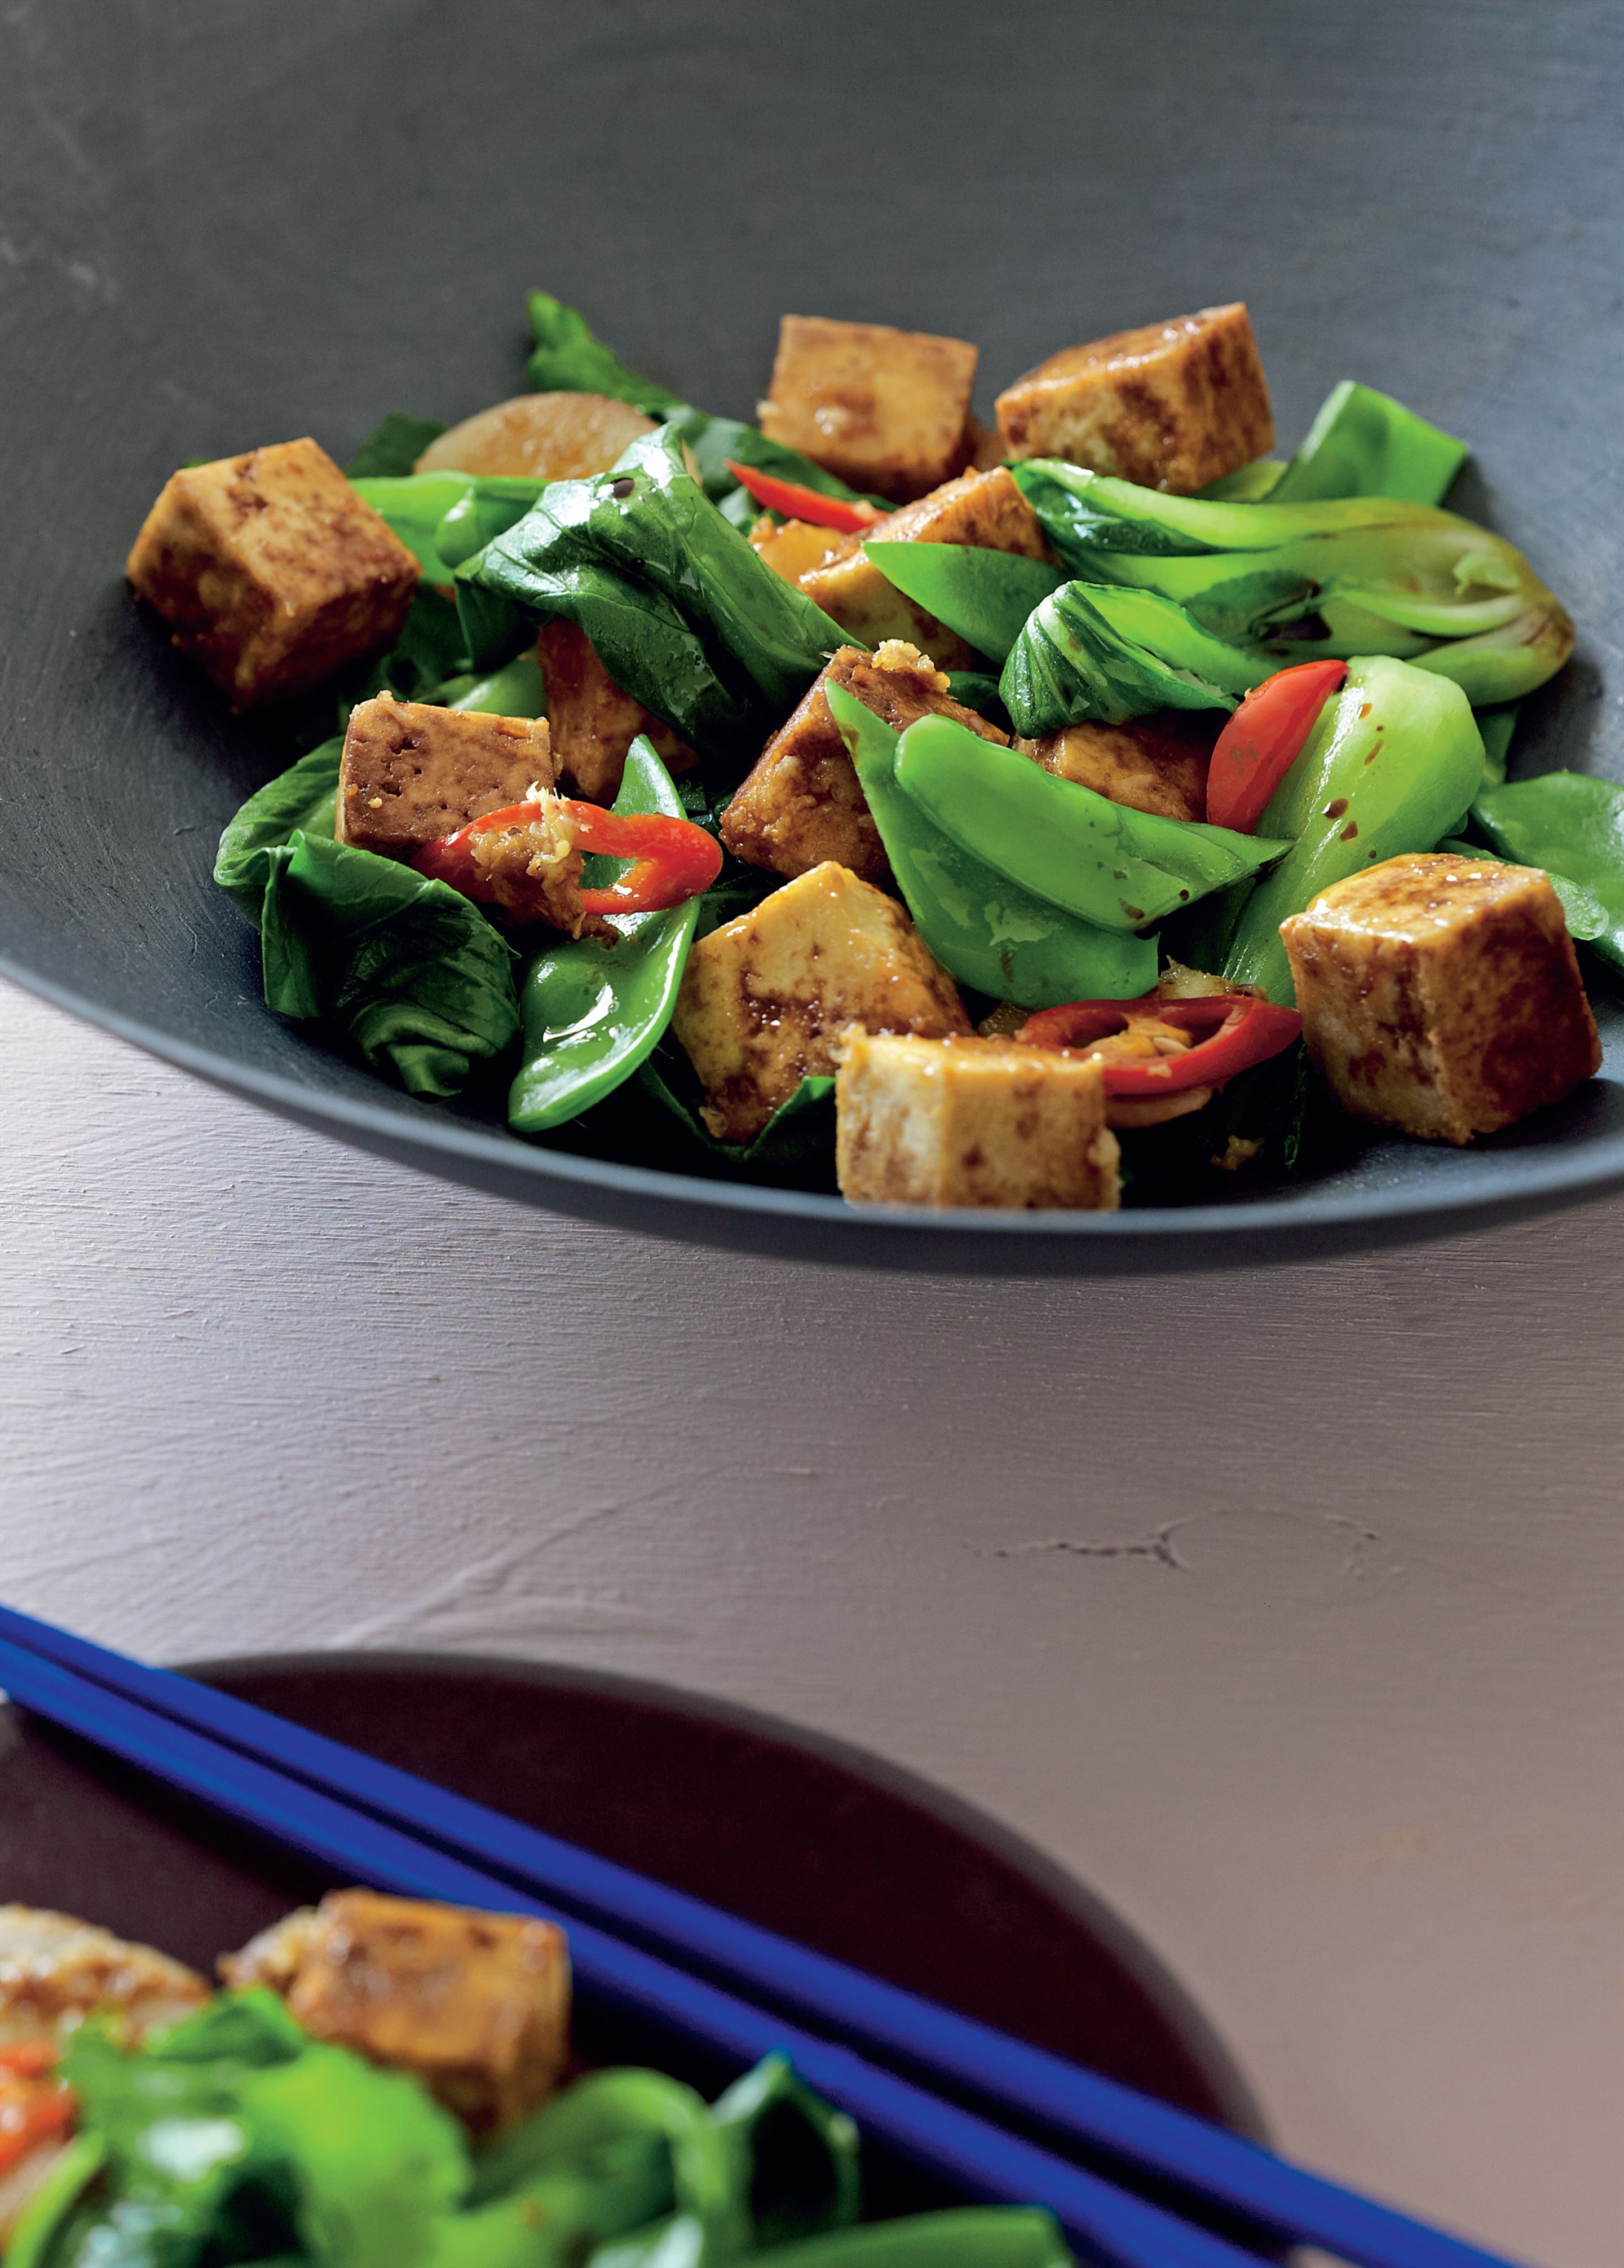 Stir-fried tofu with Asian greens